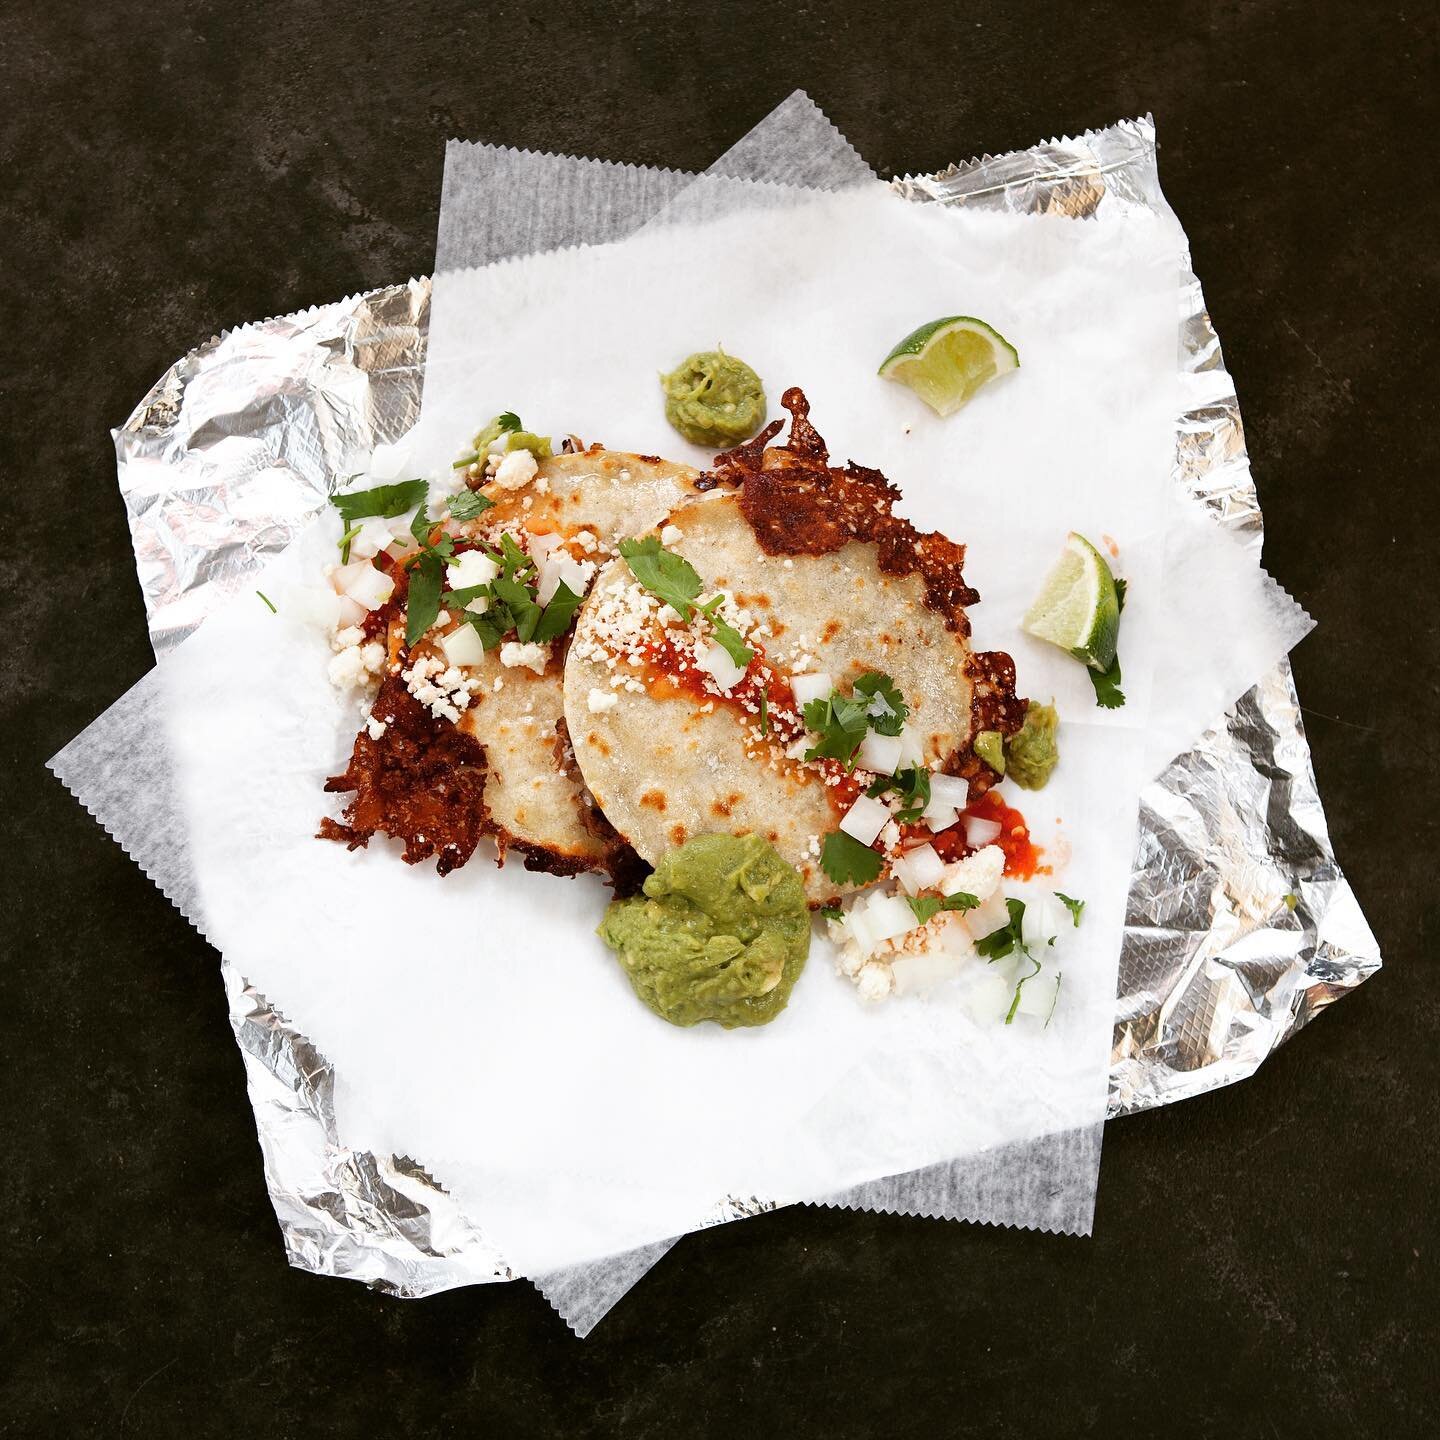 Quesadillas are always a good idea!
This one is filled with carnitas, quesillo, and salsa Fresca.
📸: @aliza_eliazarov 🧡
.
.
.
#quesadilla #quesillo #tallulahstaqueria #tallulahstacos
#pvdeats ##chicanocuisine #guacamole #providencetacos #providence